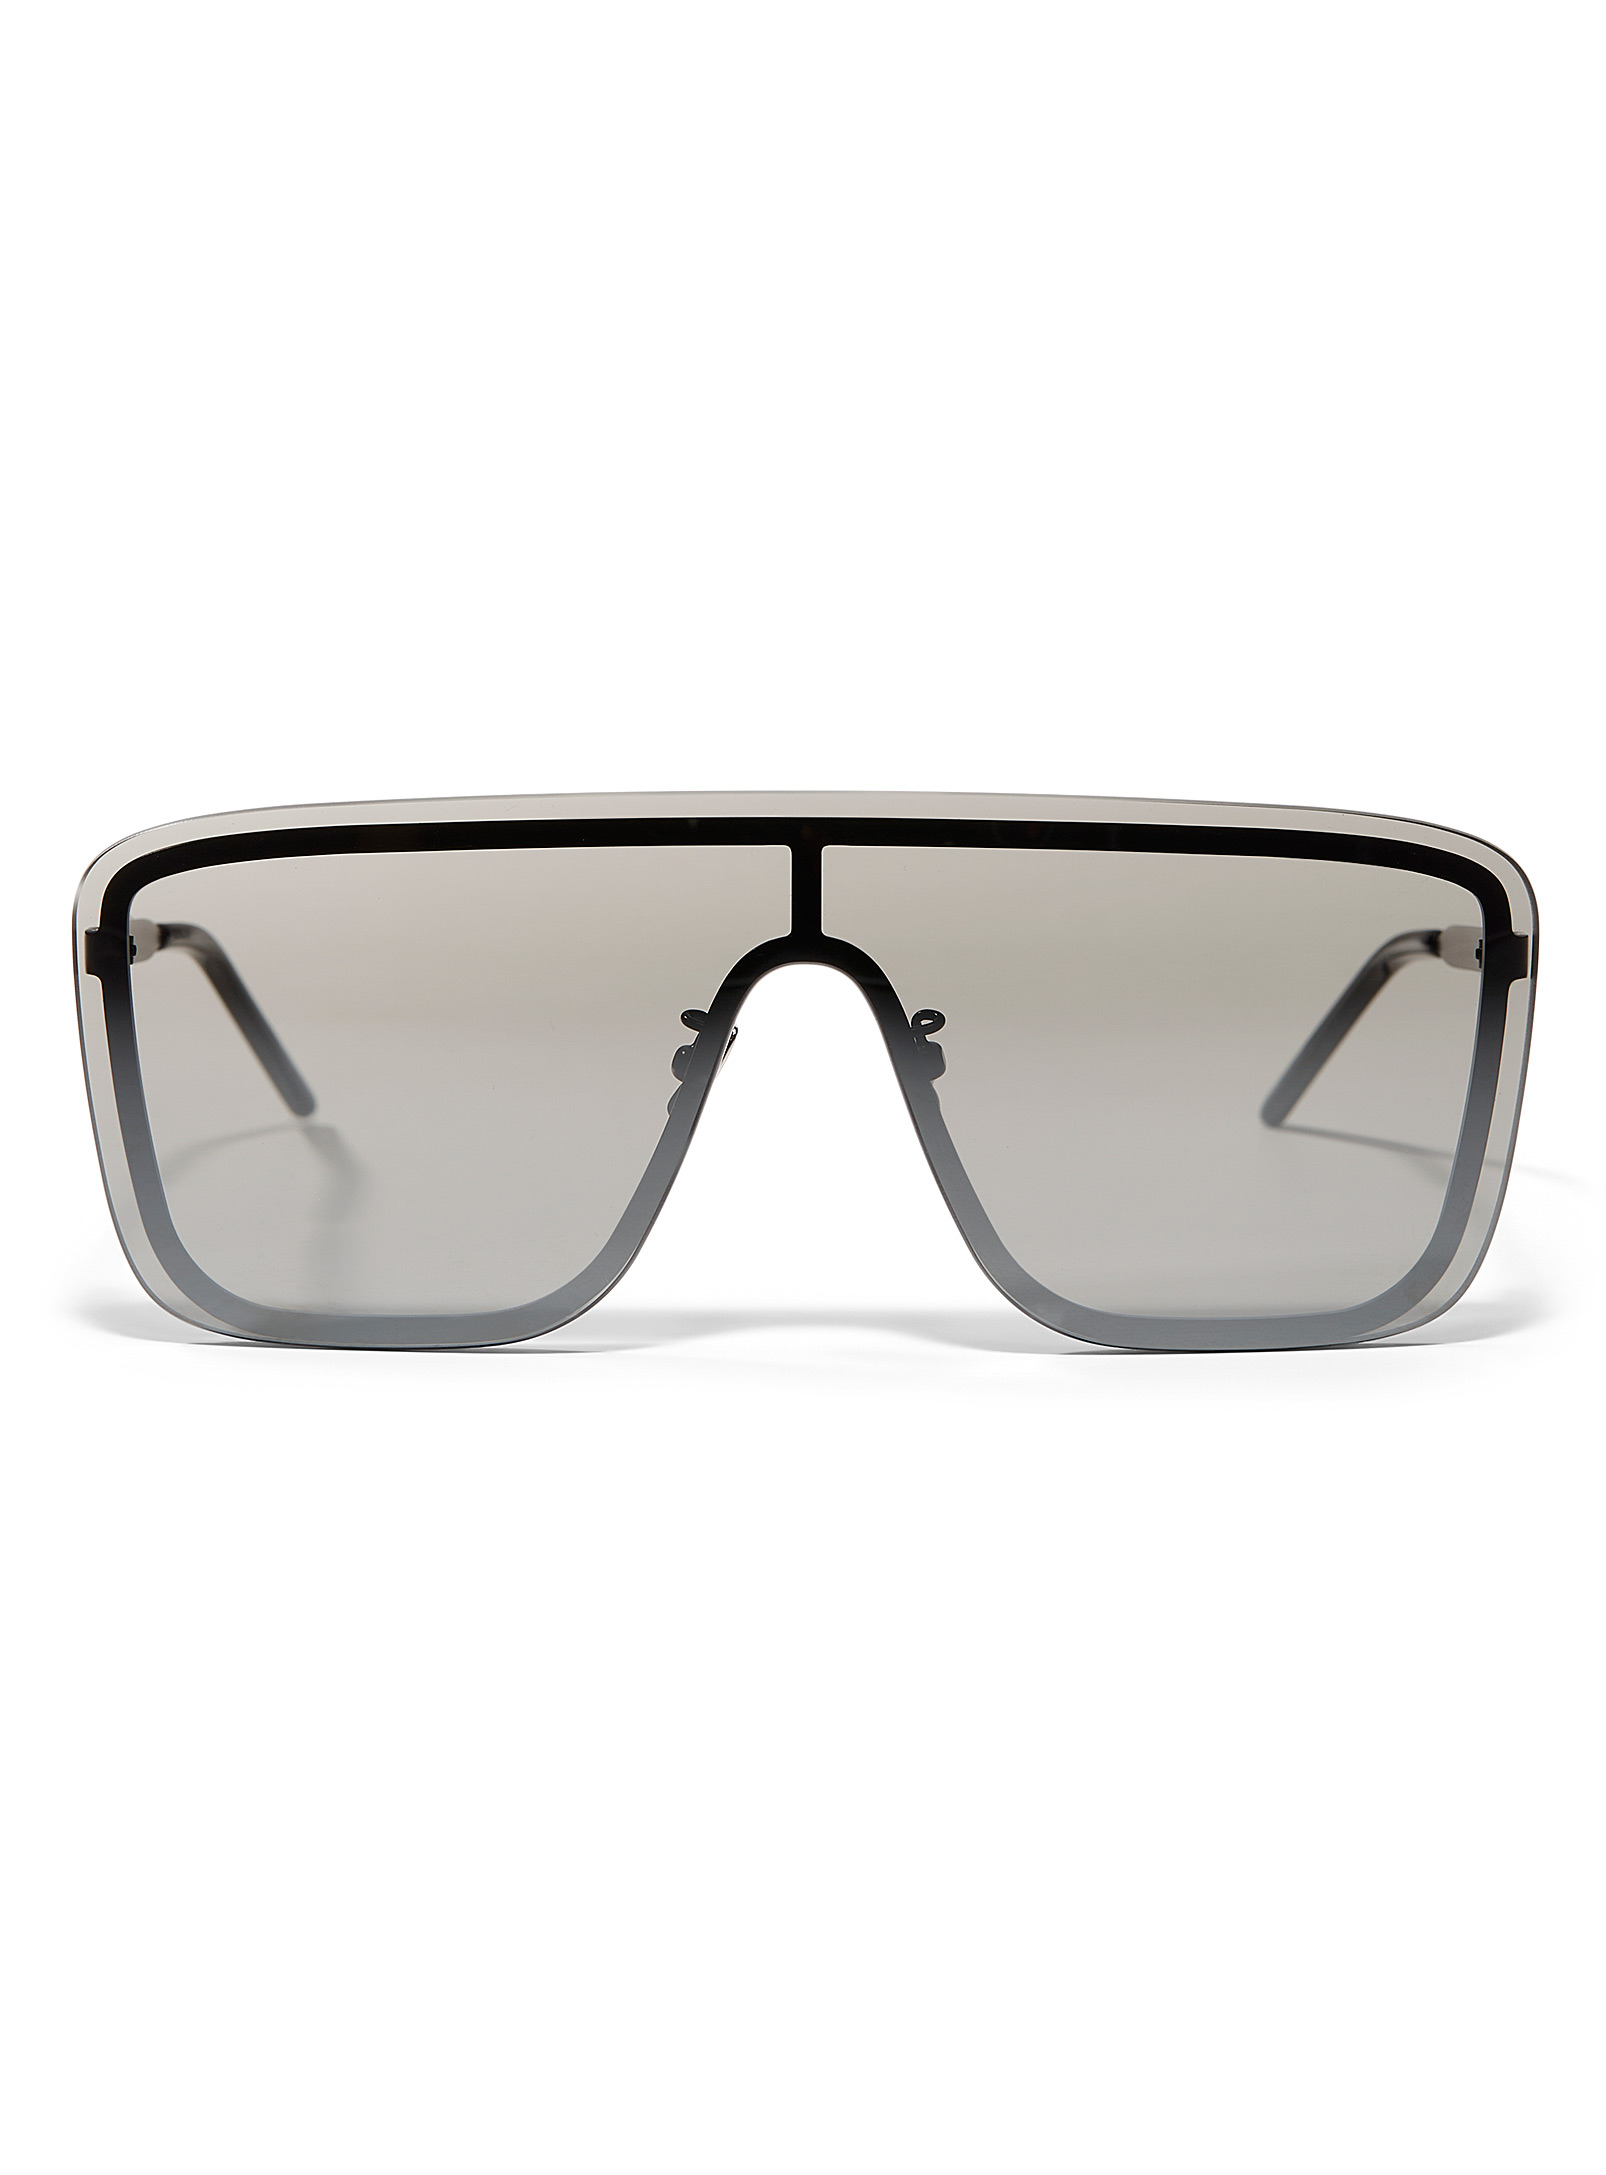 Saint Laurent - Black shield sunglasses